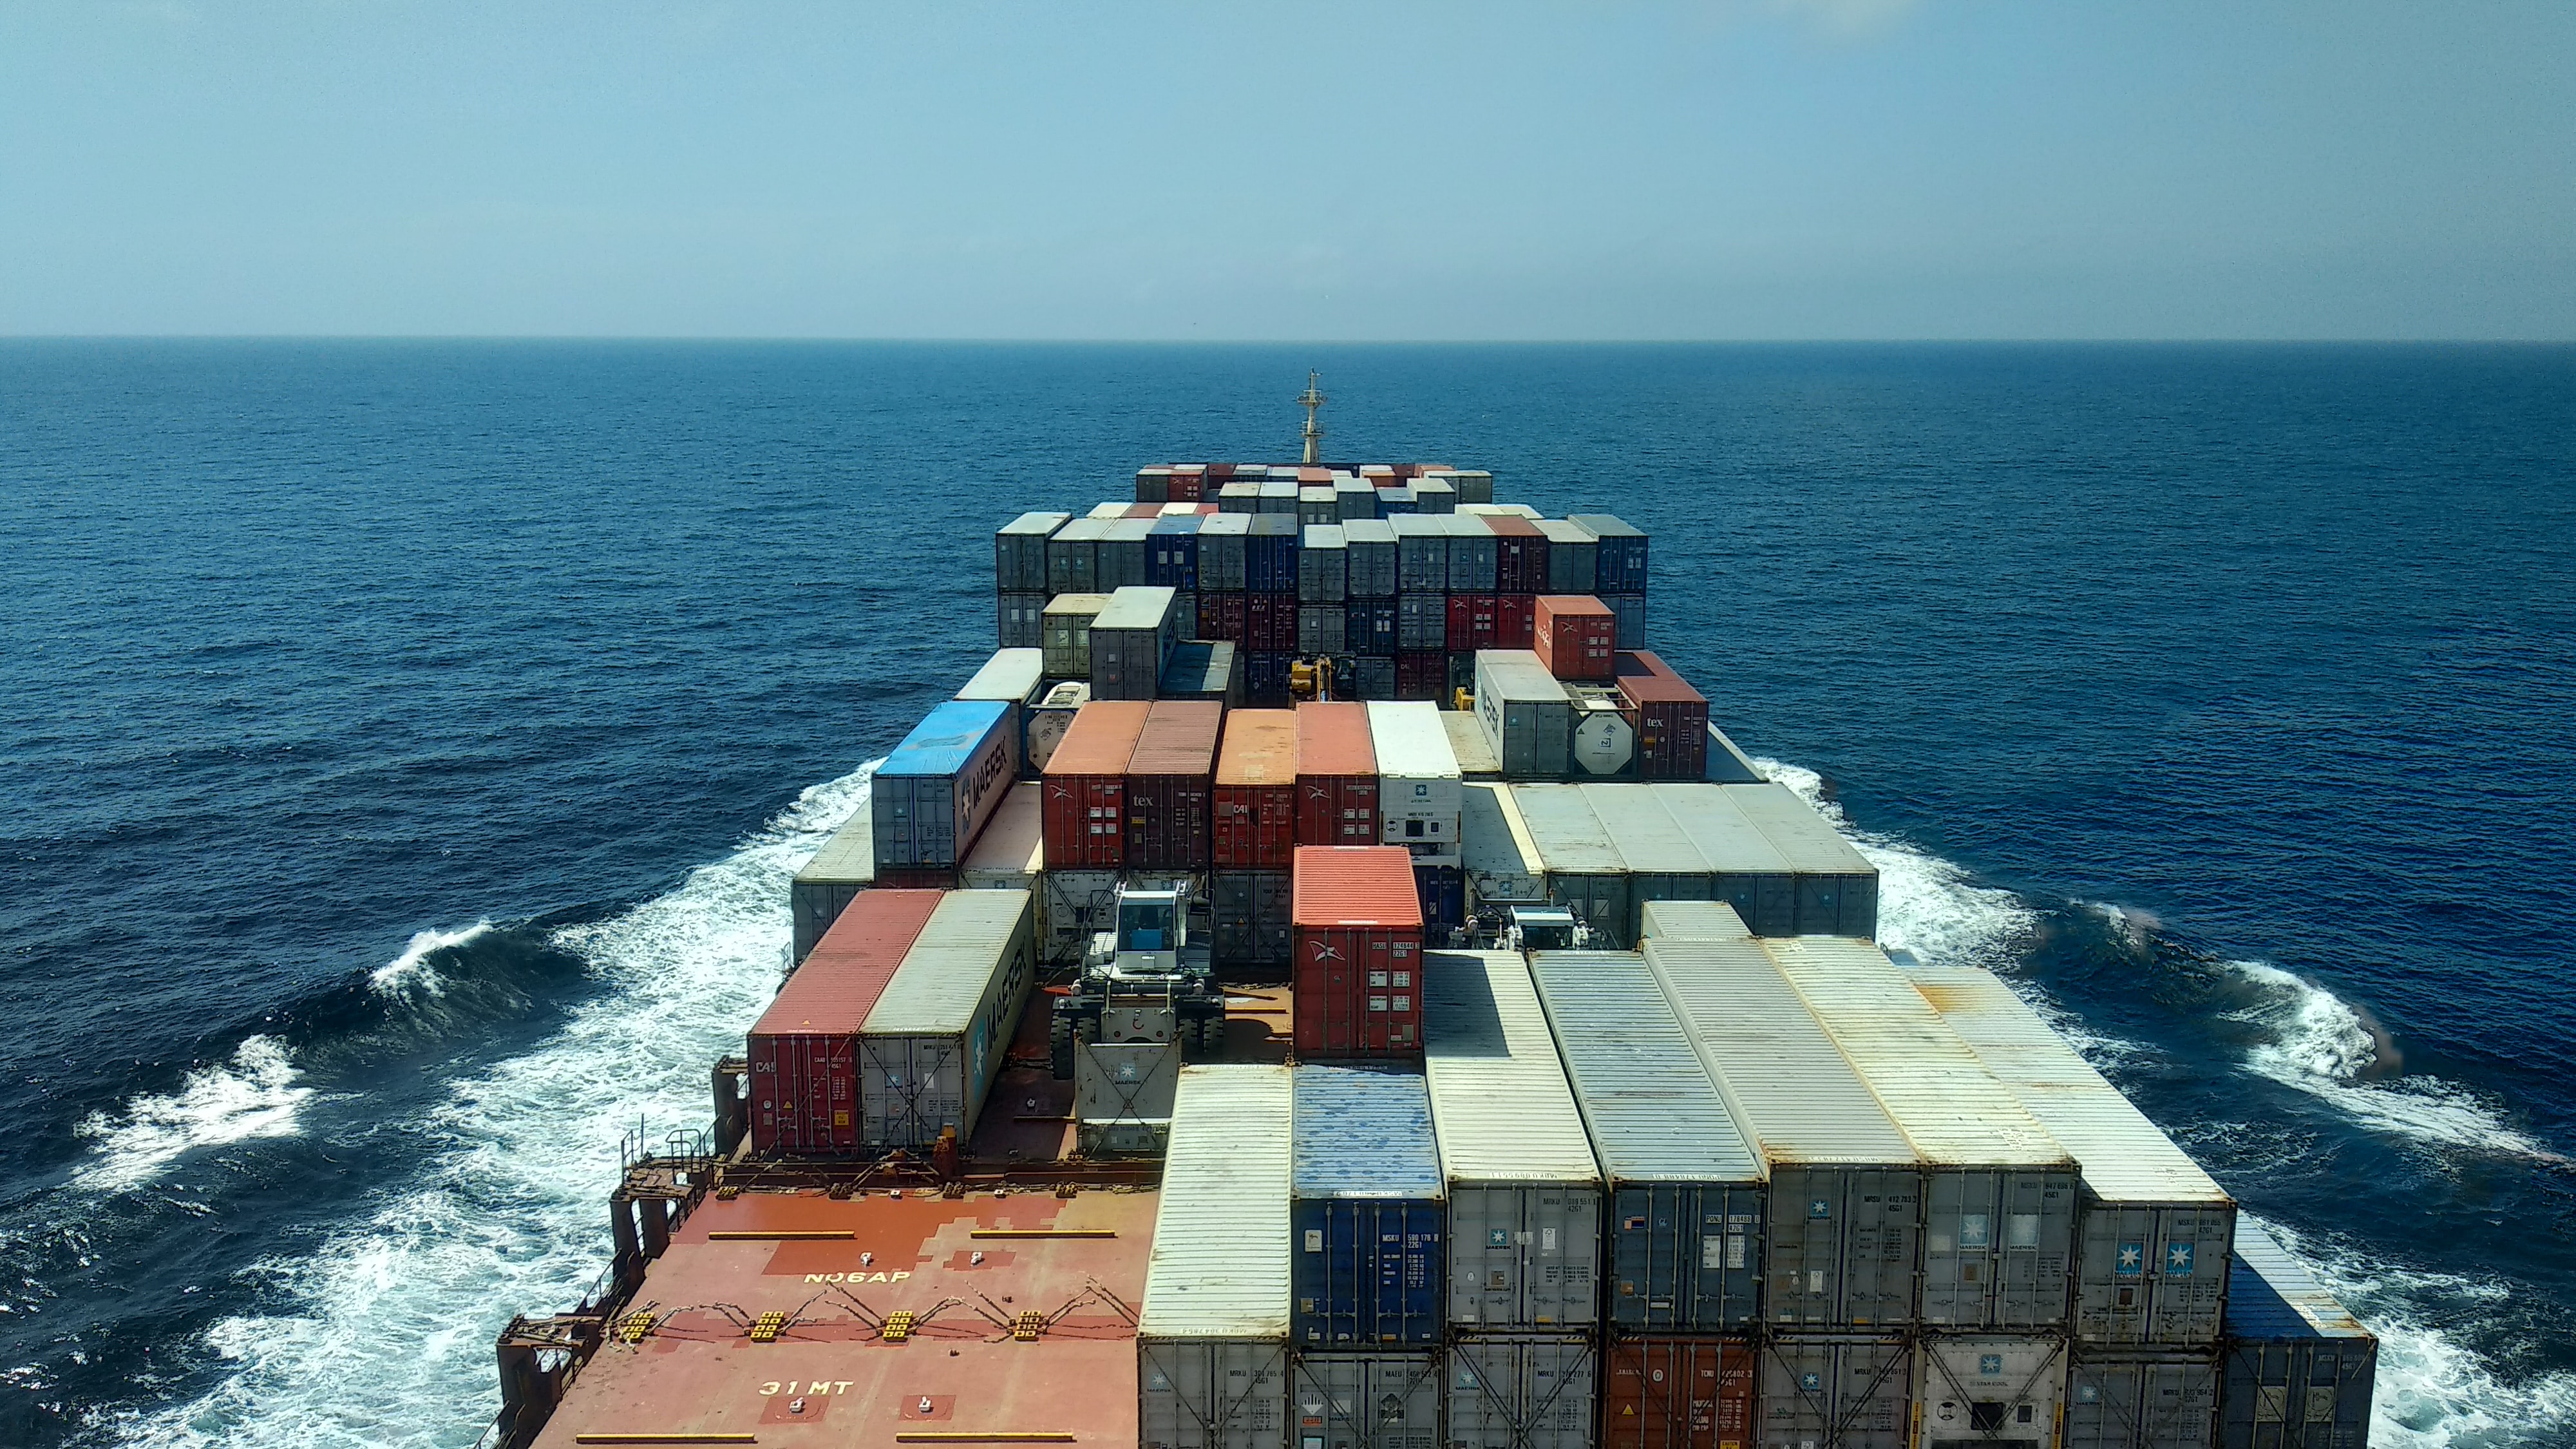 Sea Freight Import